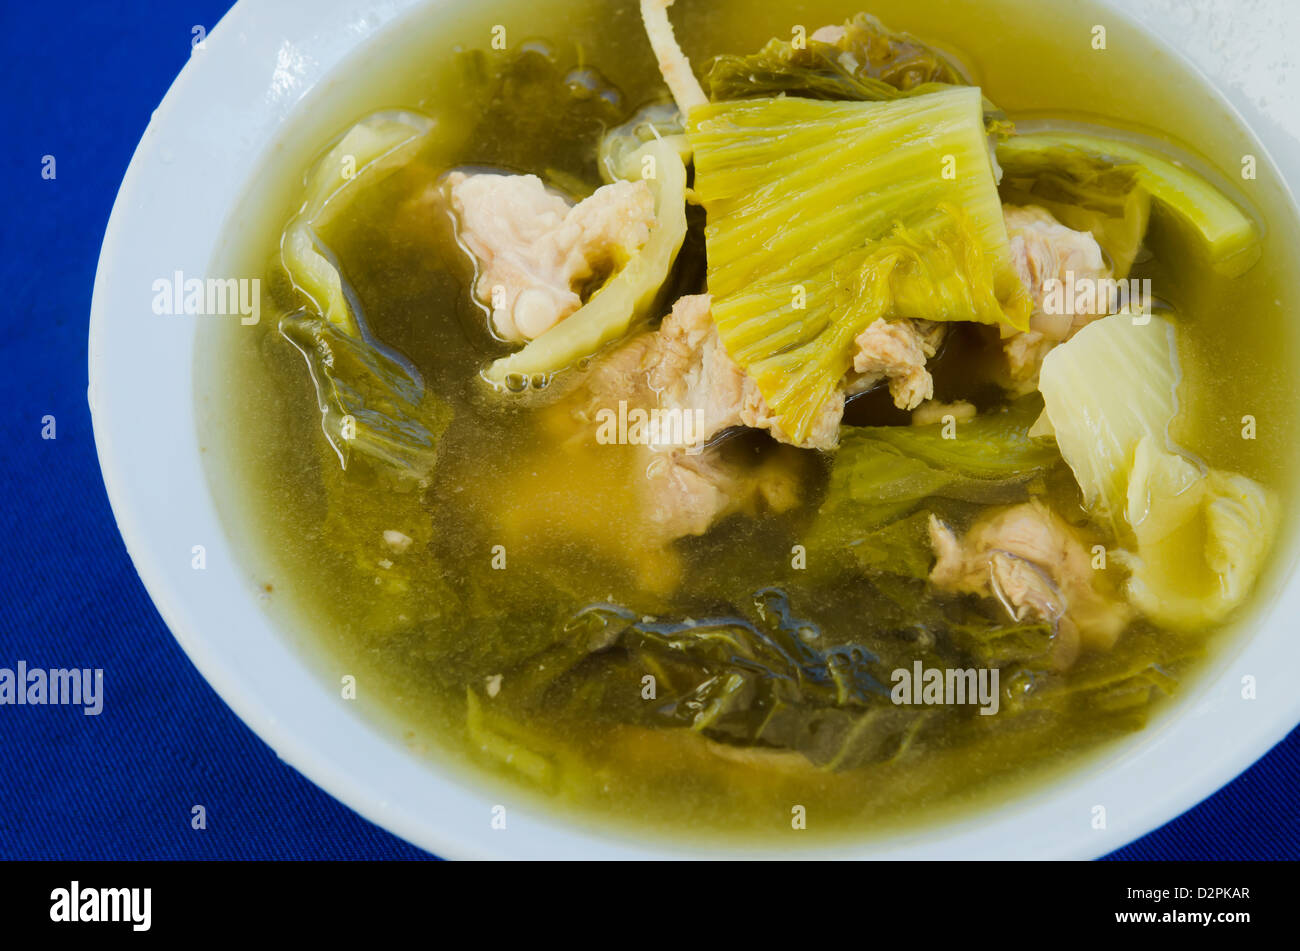 https://c8.alamy.com/comp/D2PKAR/clear-soup-with-pork-and-pickled-vegetables-D2PKAR.jpg